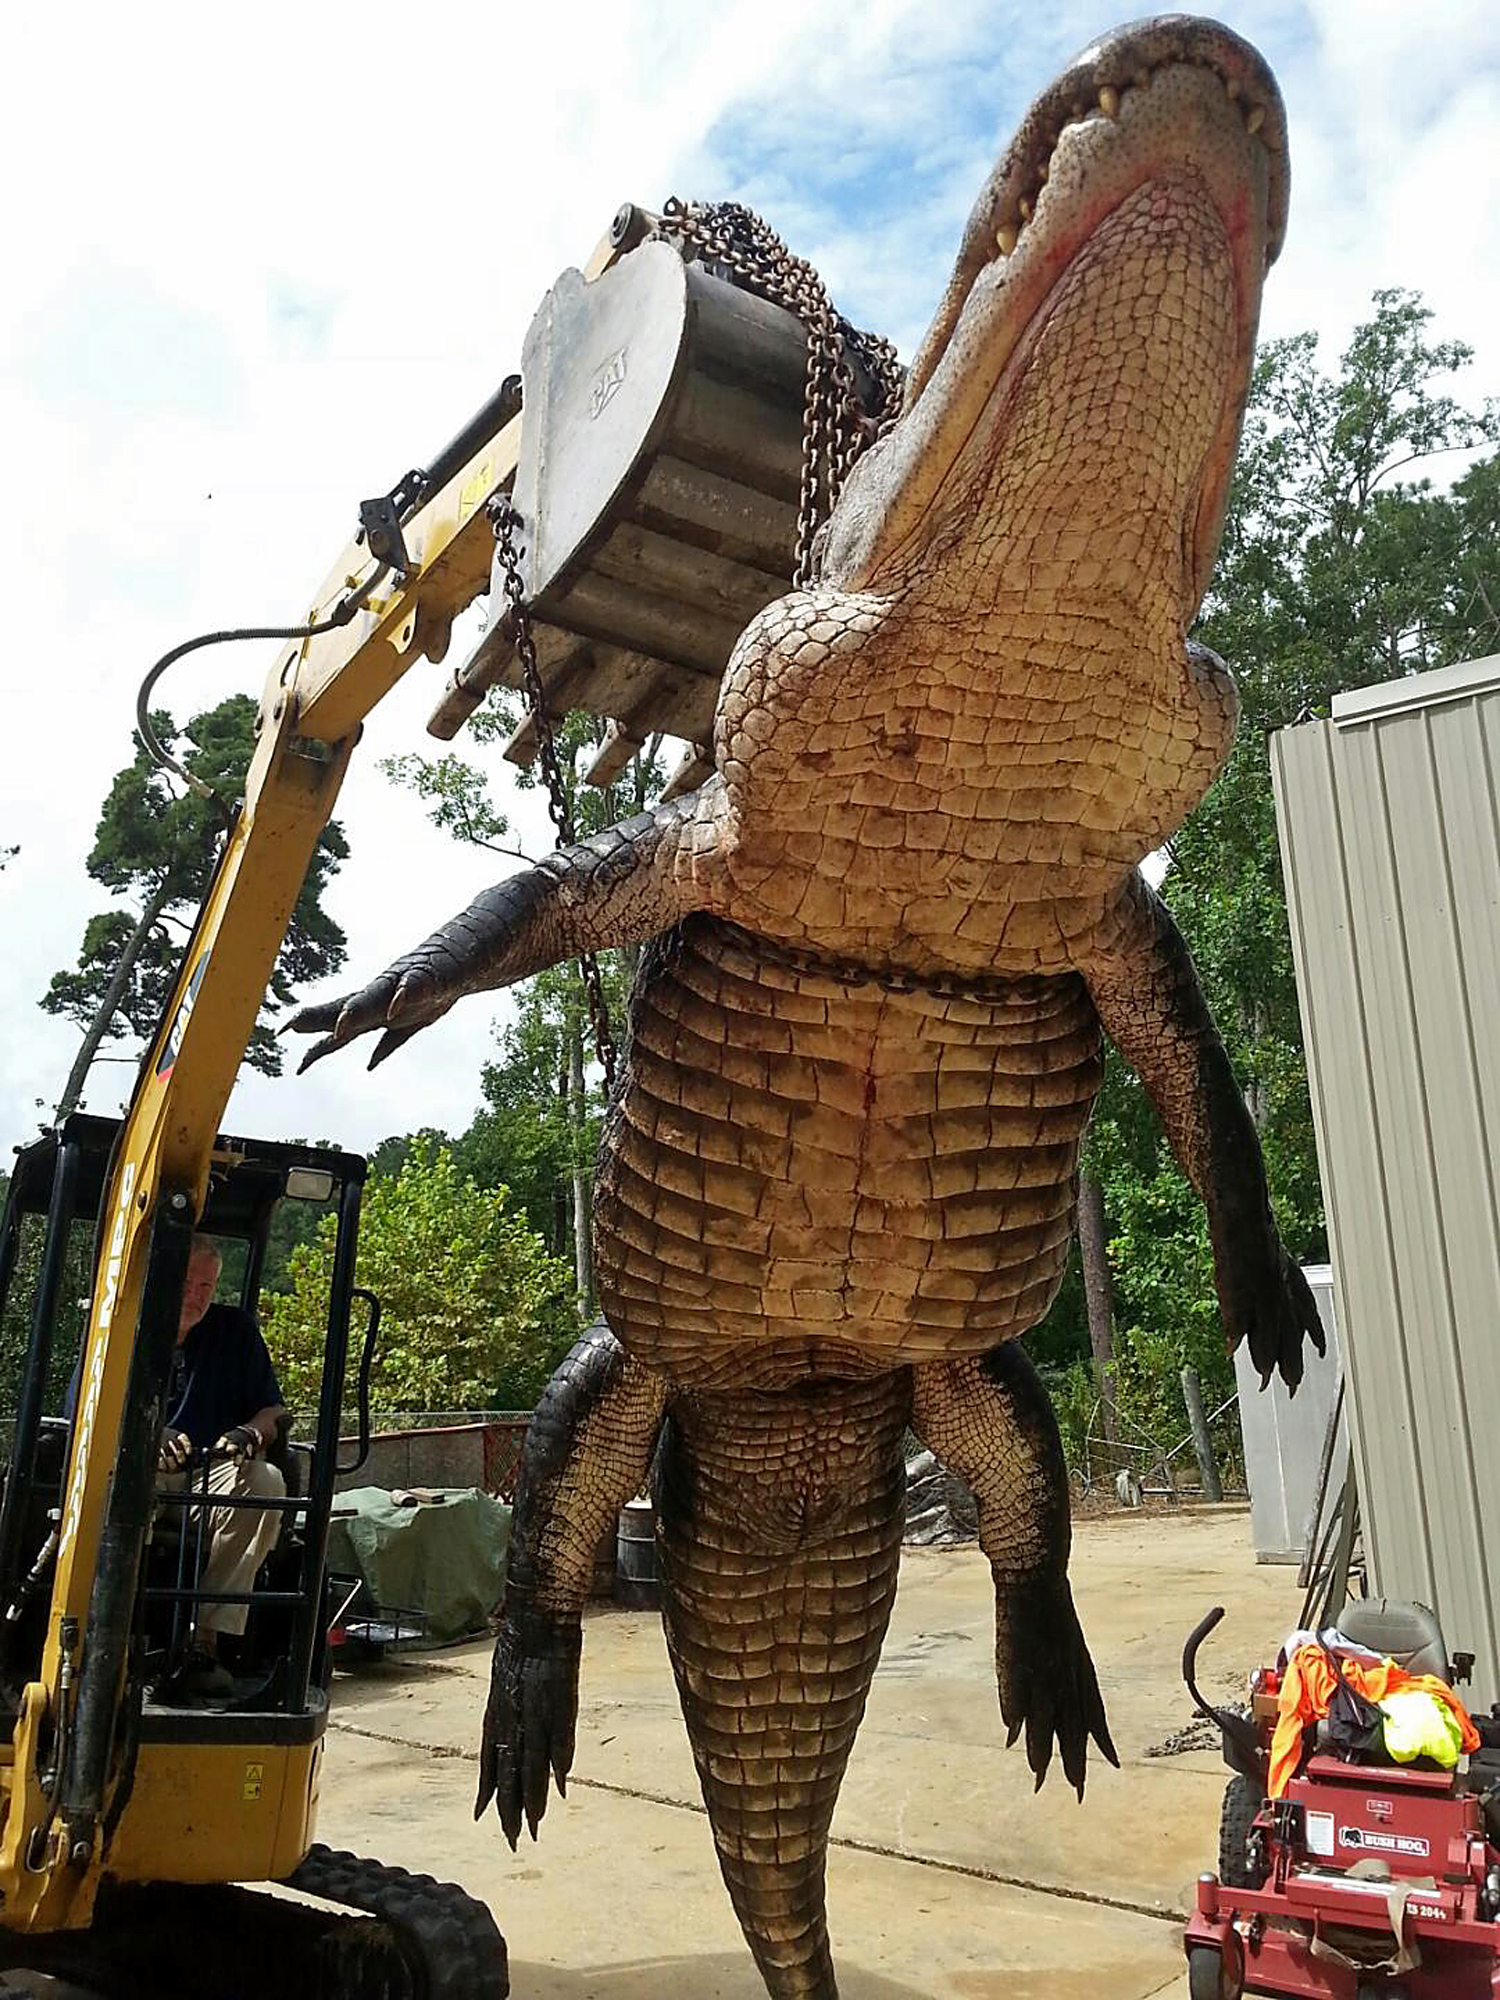 Alabama alligator season approaching 